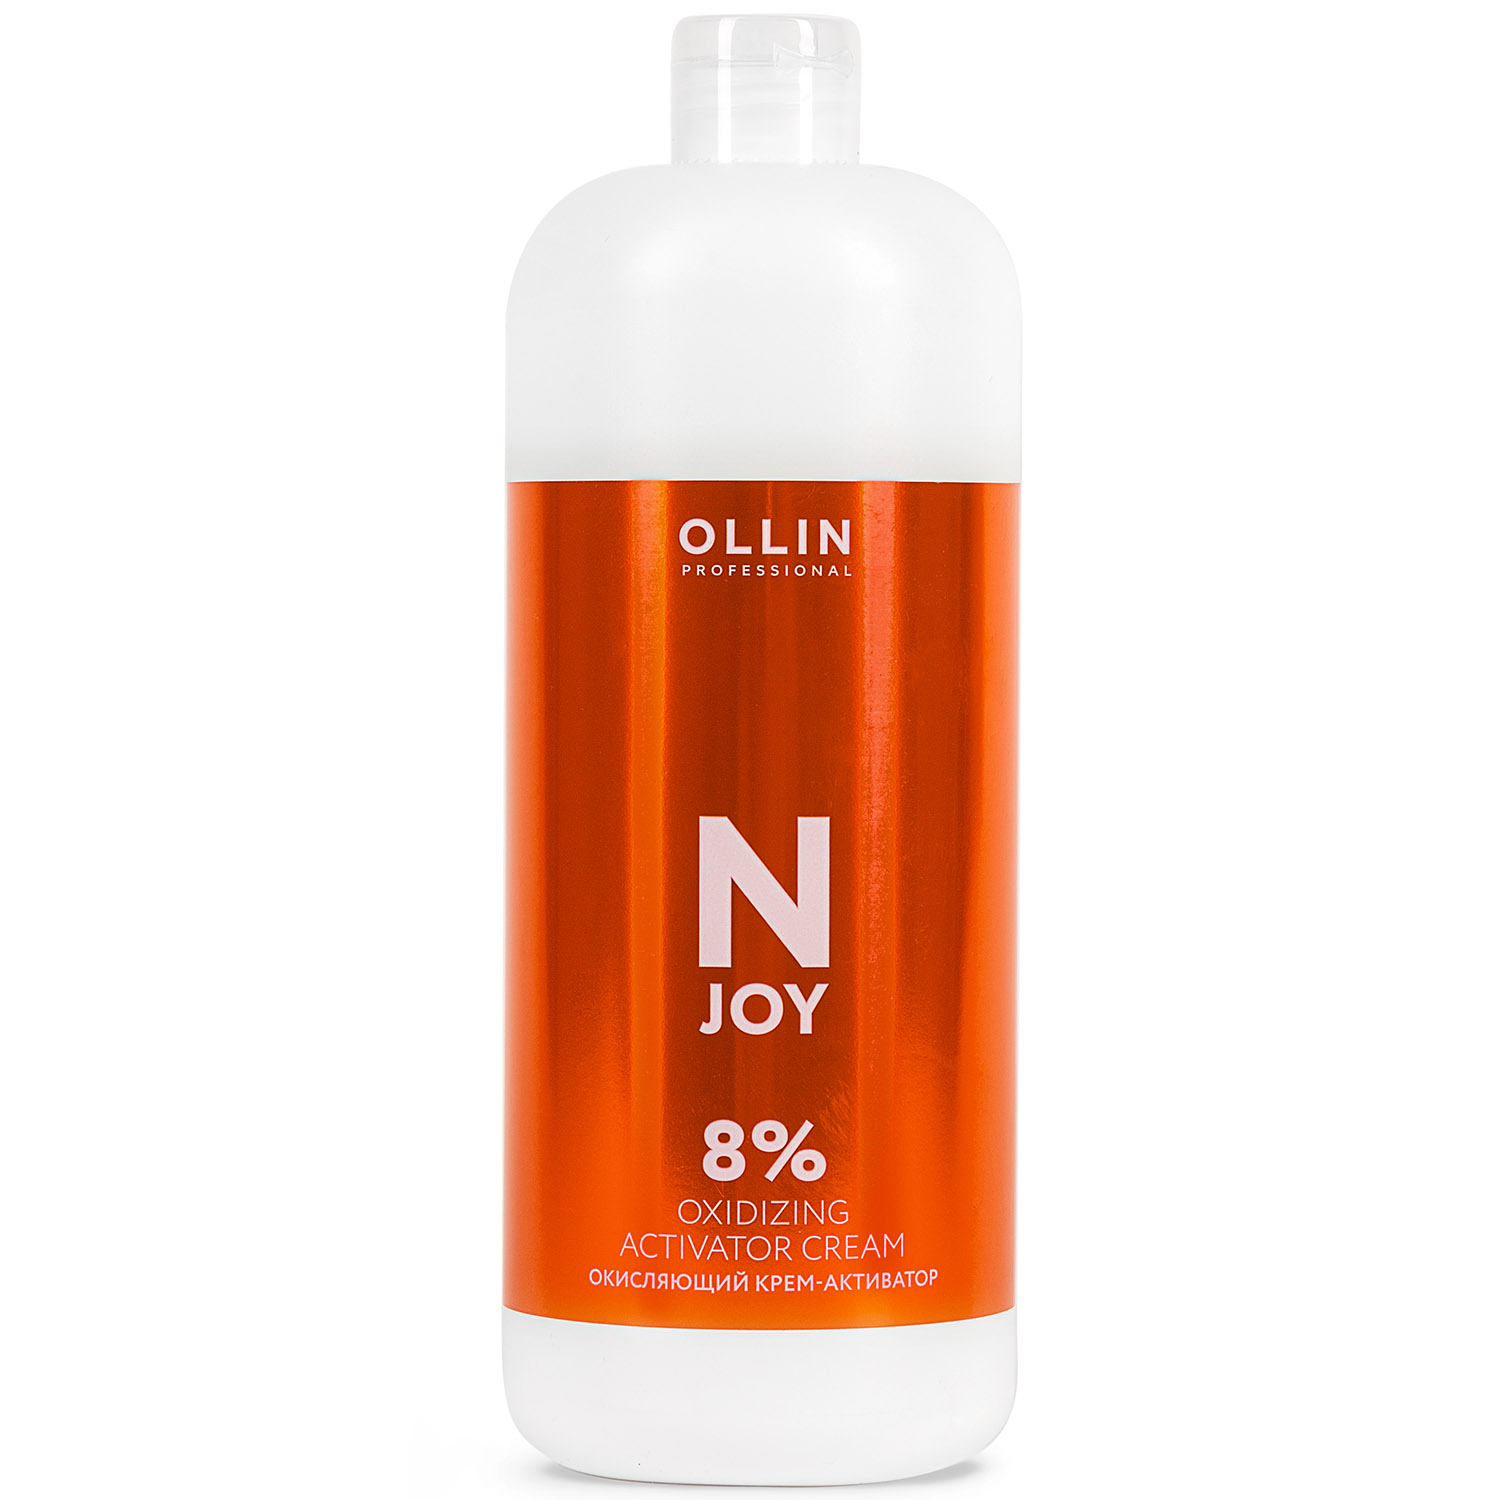 Ollin Professional Окисляющий крем-активатор 8%, 1000 мл (Ollin Professional, N-Joy)